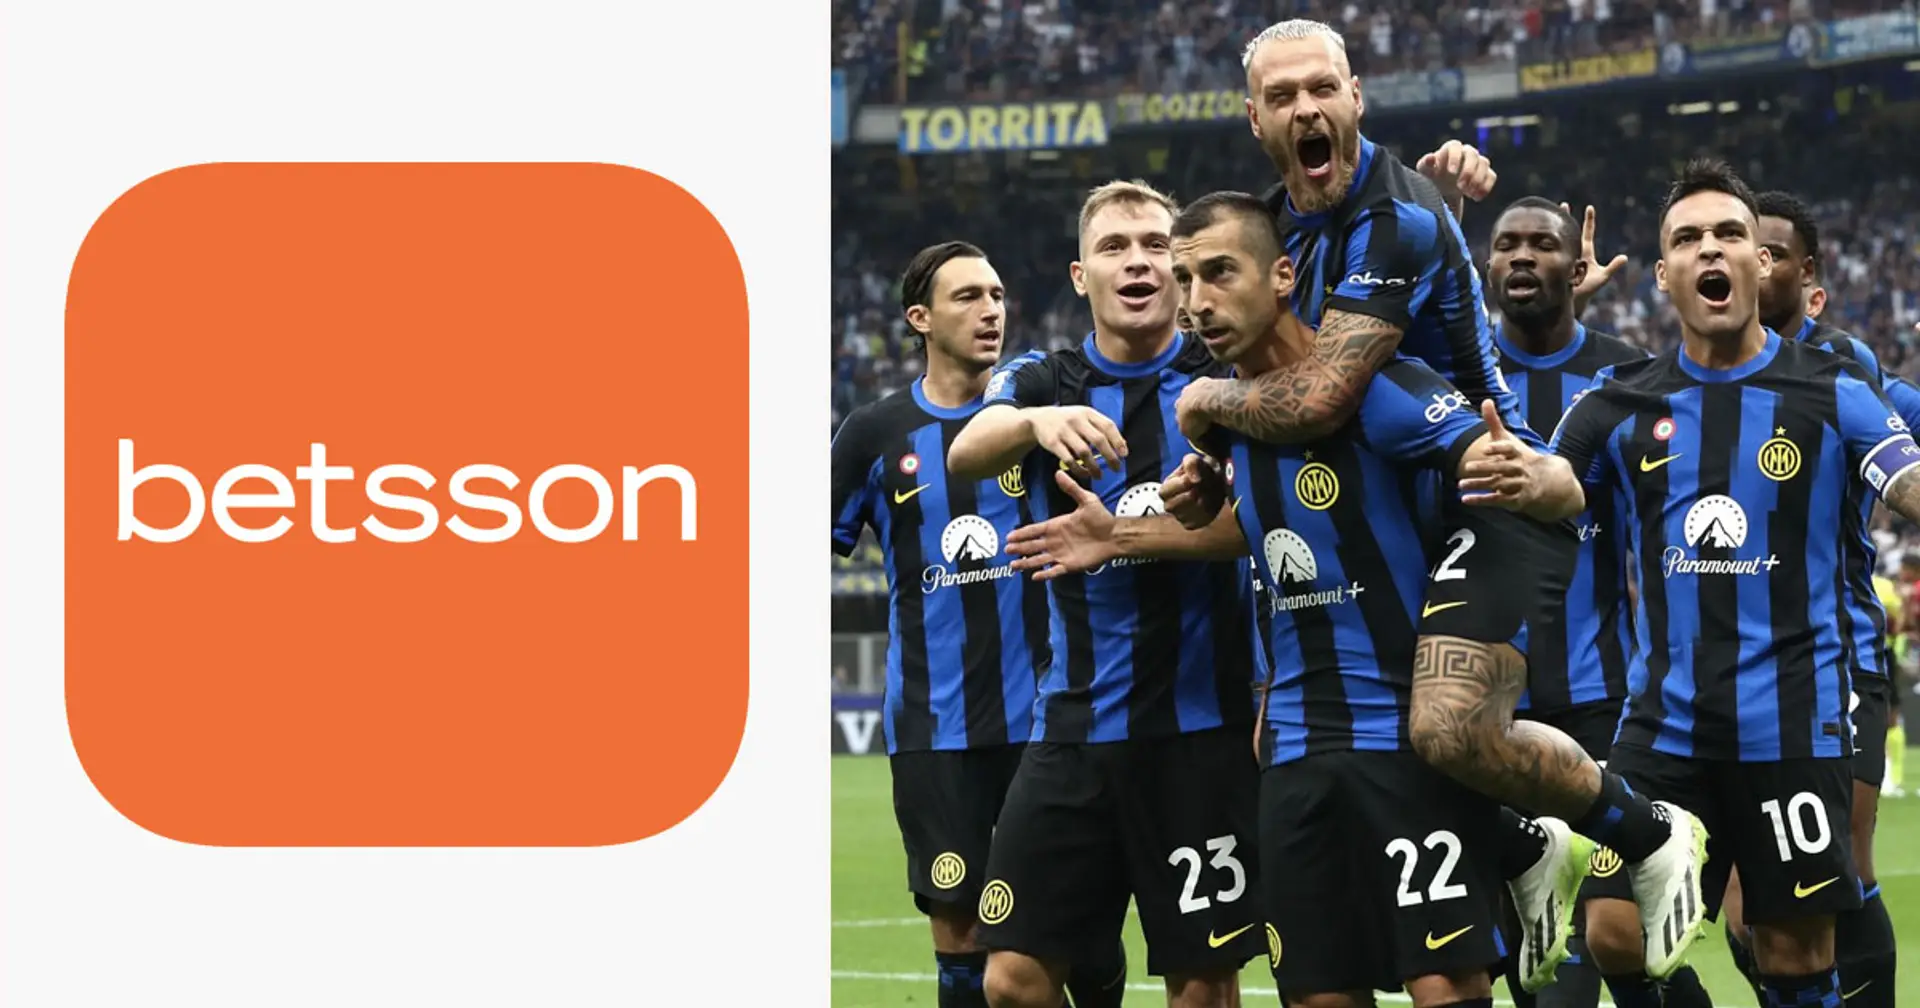 Betsson offer 5-year €150m sponshorship deal to Inter Milan, could replace Paramount+ as kit sponsor